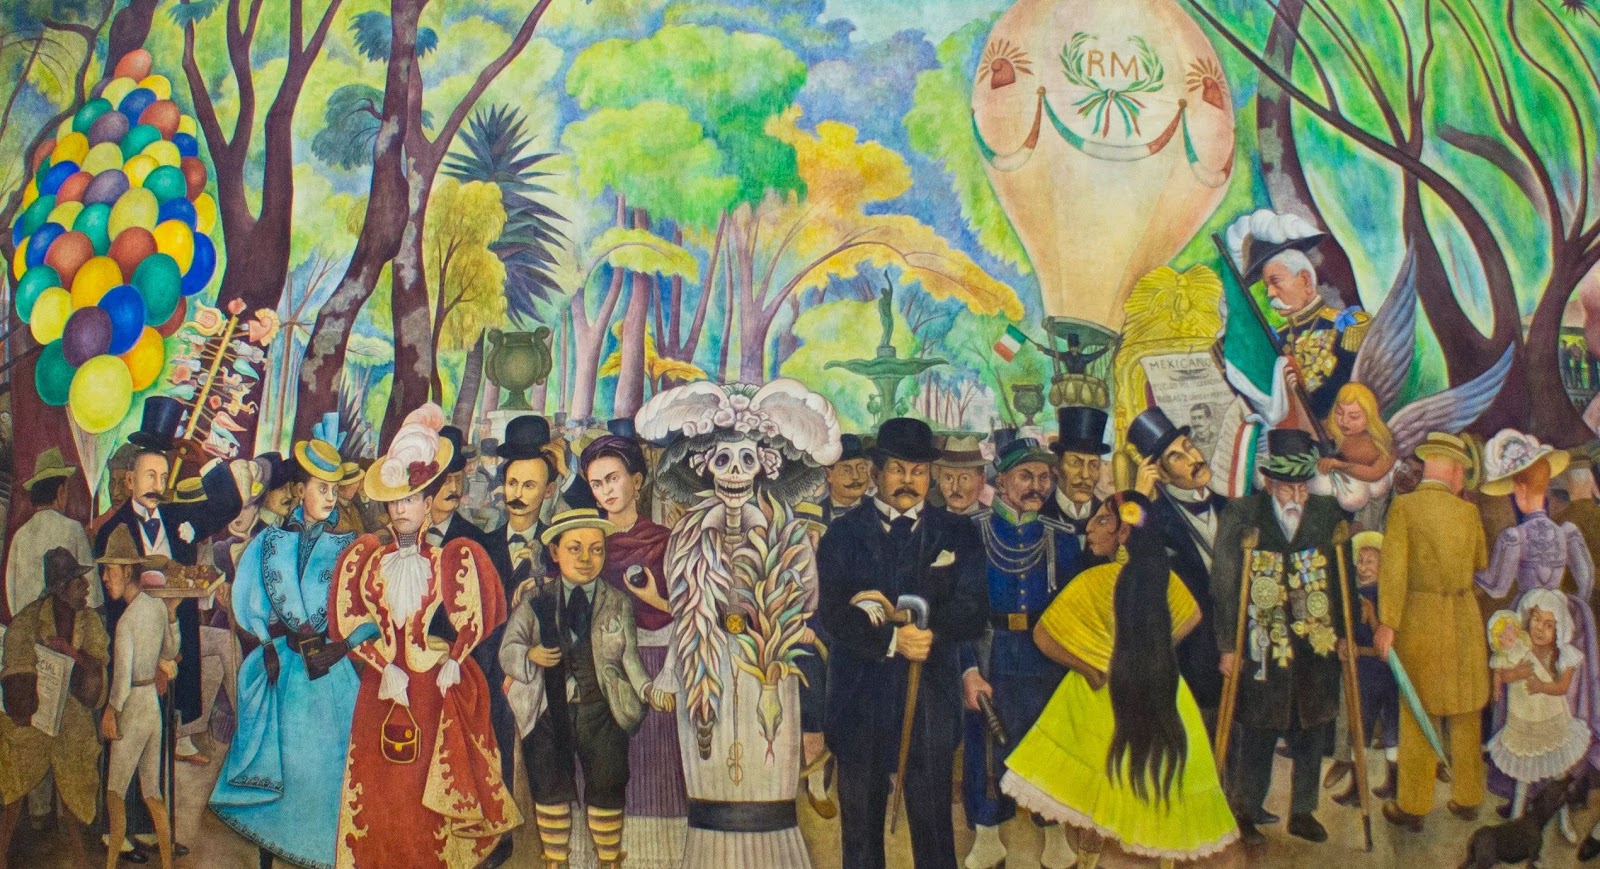 Diego+Rivera-1886-1957 (9).jpg